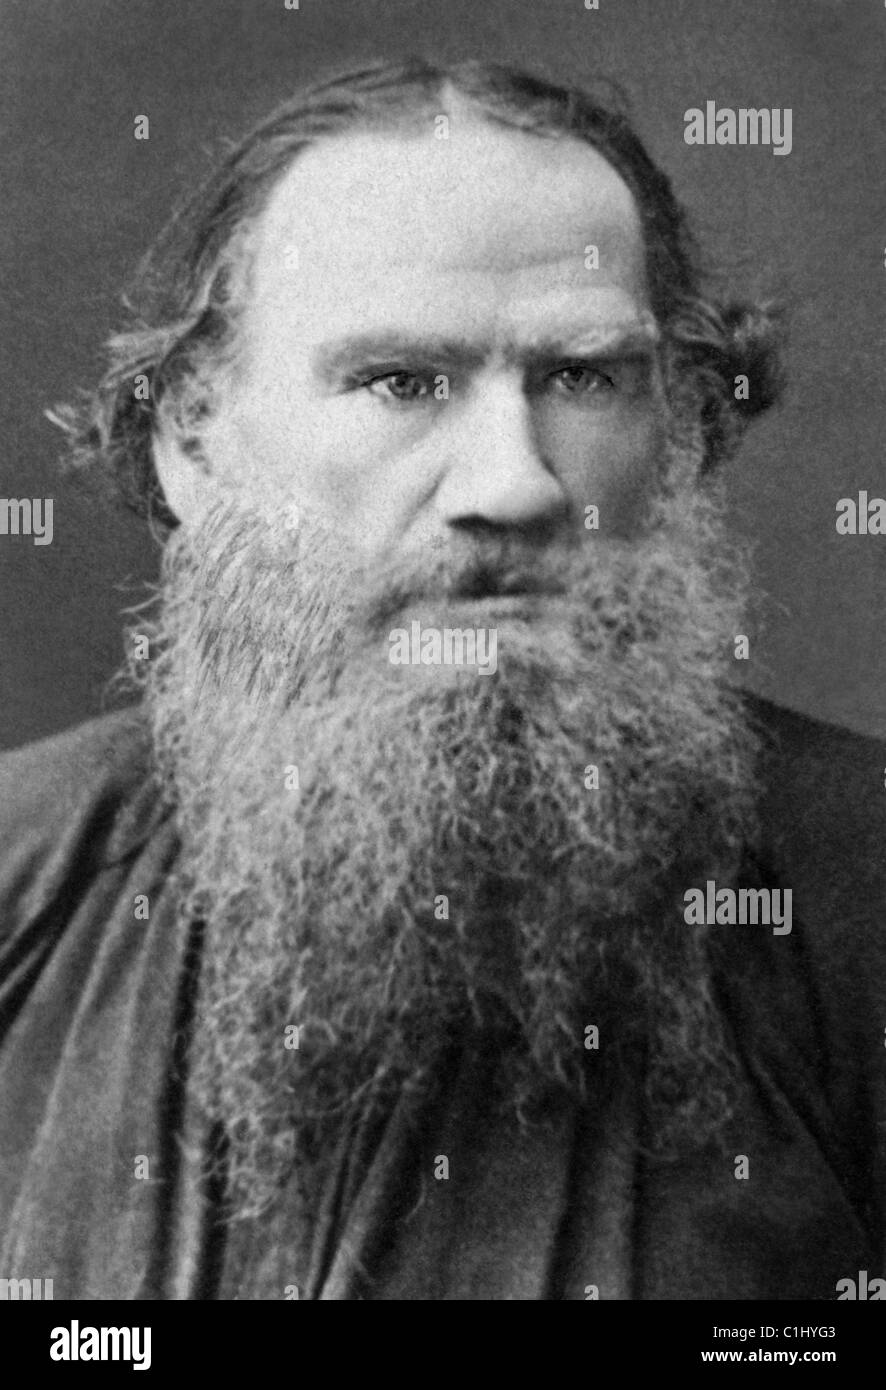 Vintage portrait photo of Russian writer Leo Tolstoy (1828 – 1910) – author of War and Peace + Anna Karenina. Photo circa 1880 – 1885. Stock Photo